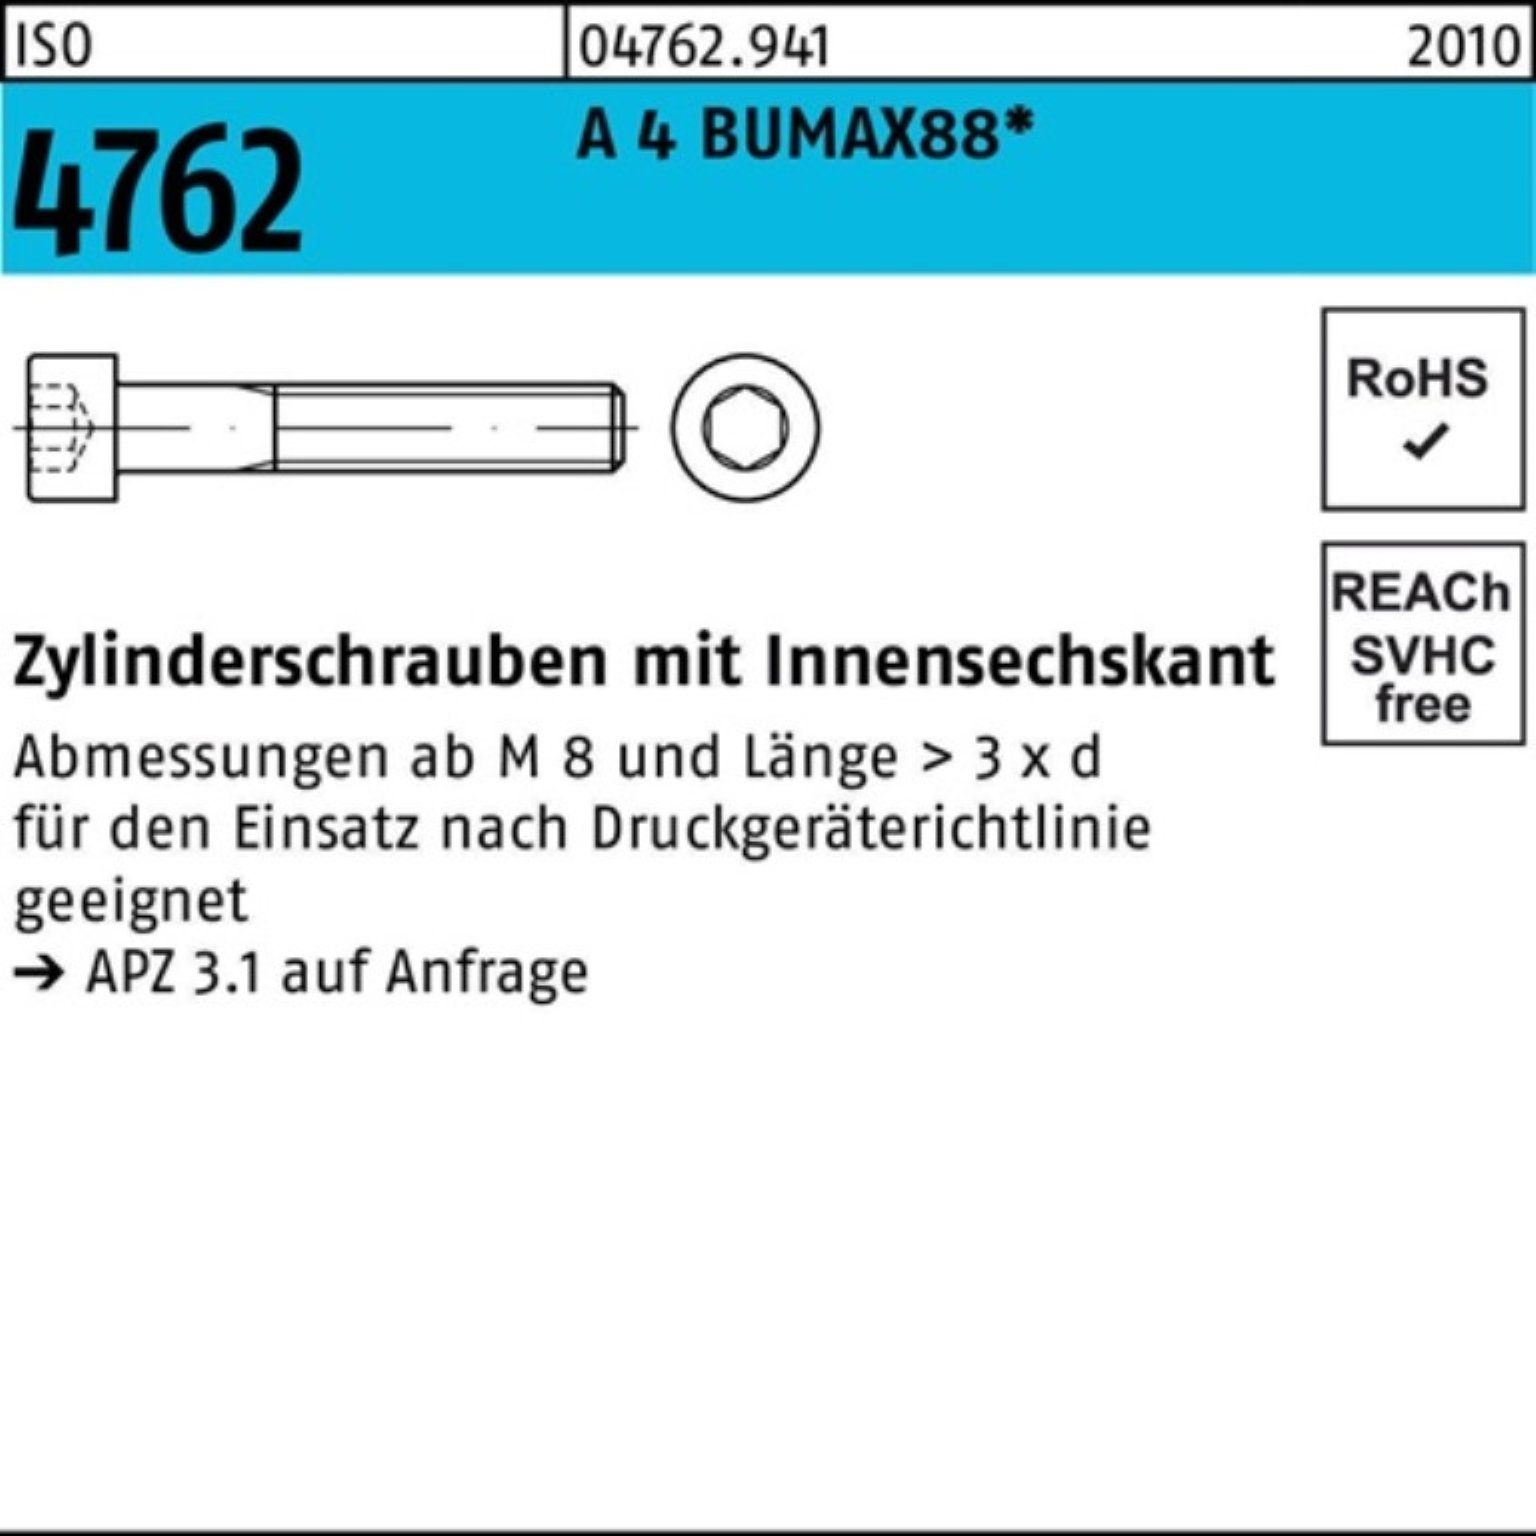 4762 S Innen-6kt Pack 100er BUMAX88 M8x 35 Zylinderschraube 50 4 ISO Bufab A Zylinderschraube